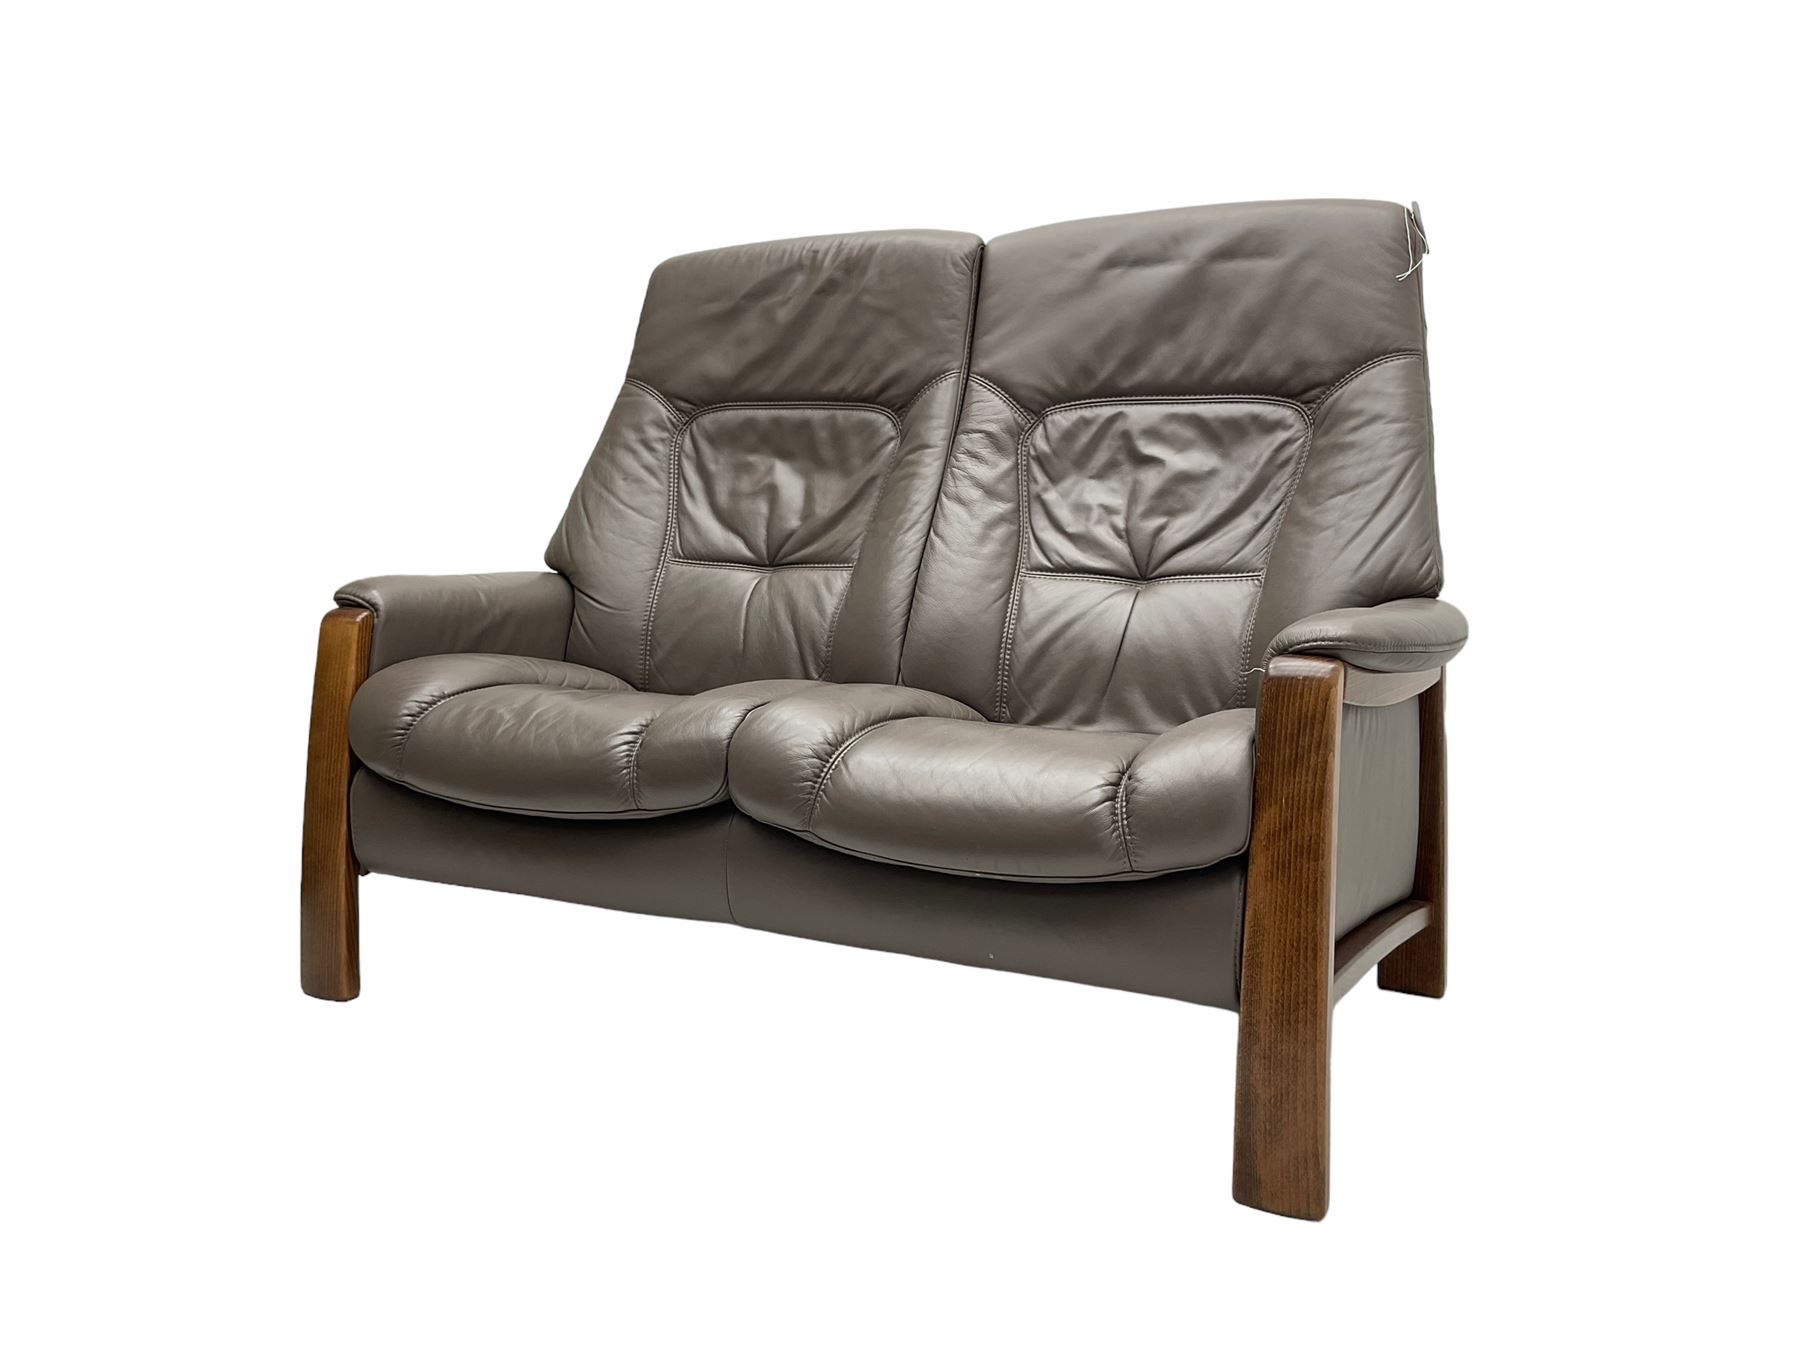 Himolla - two seat reclining sofa - Image 4 of 6